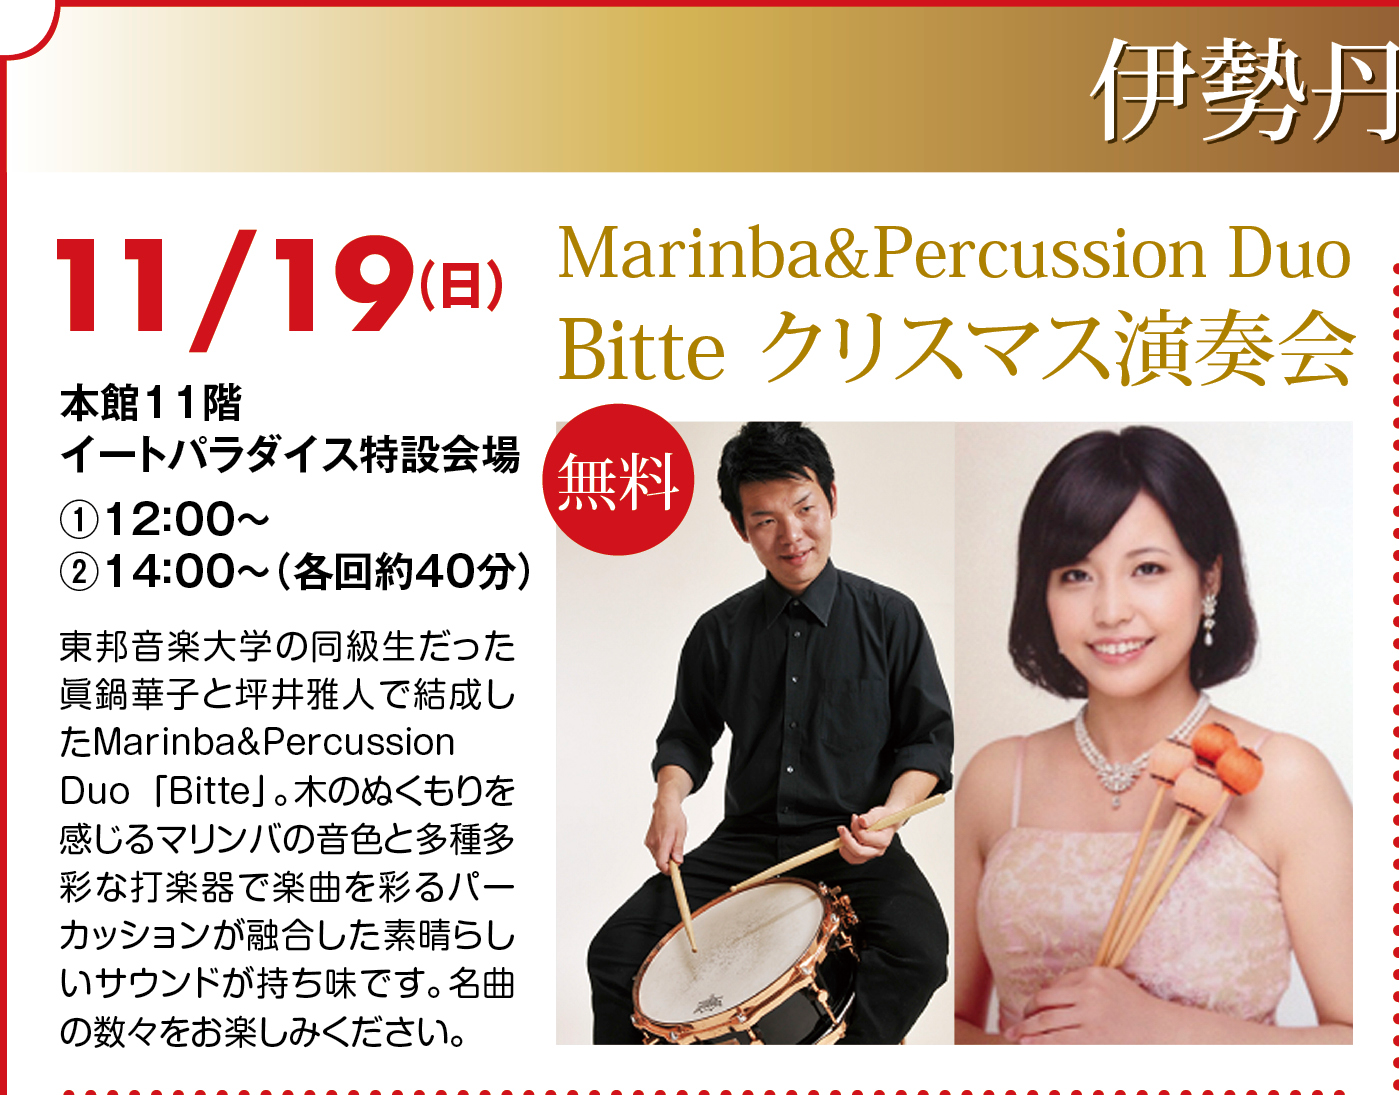 Marimba&Percussion Duo Bitte クリスマス演奏会